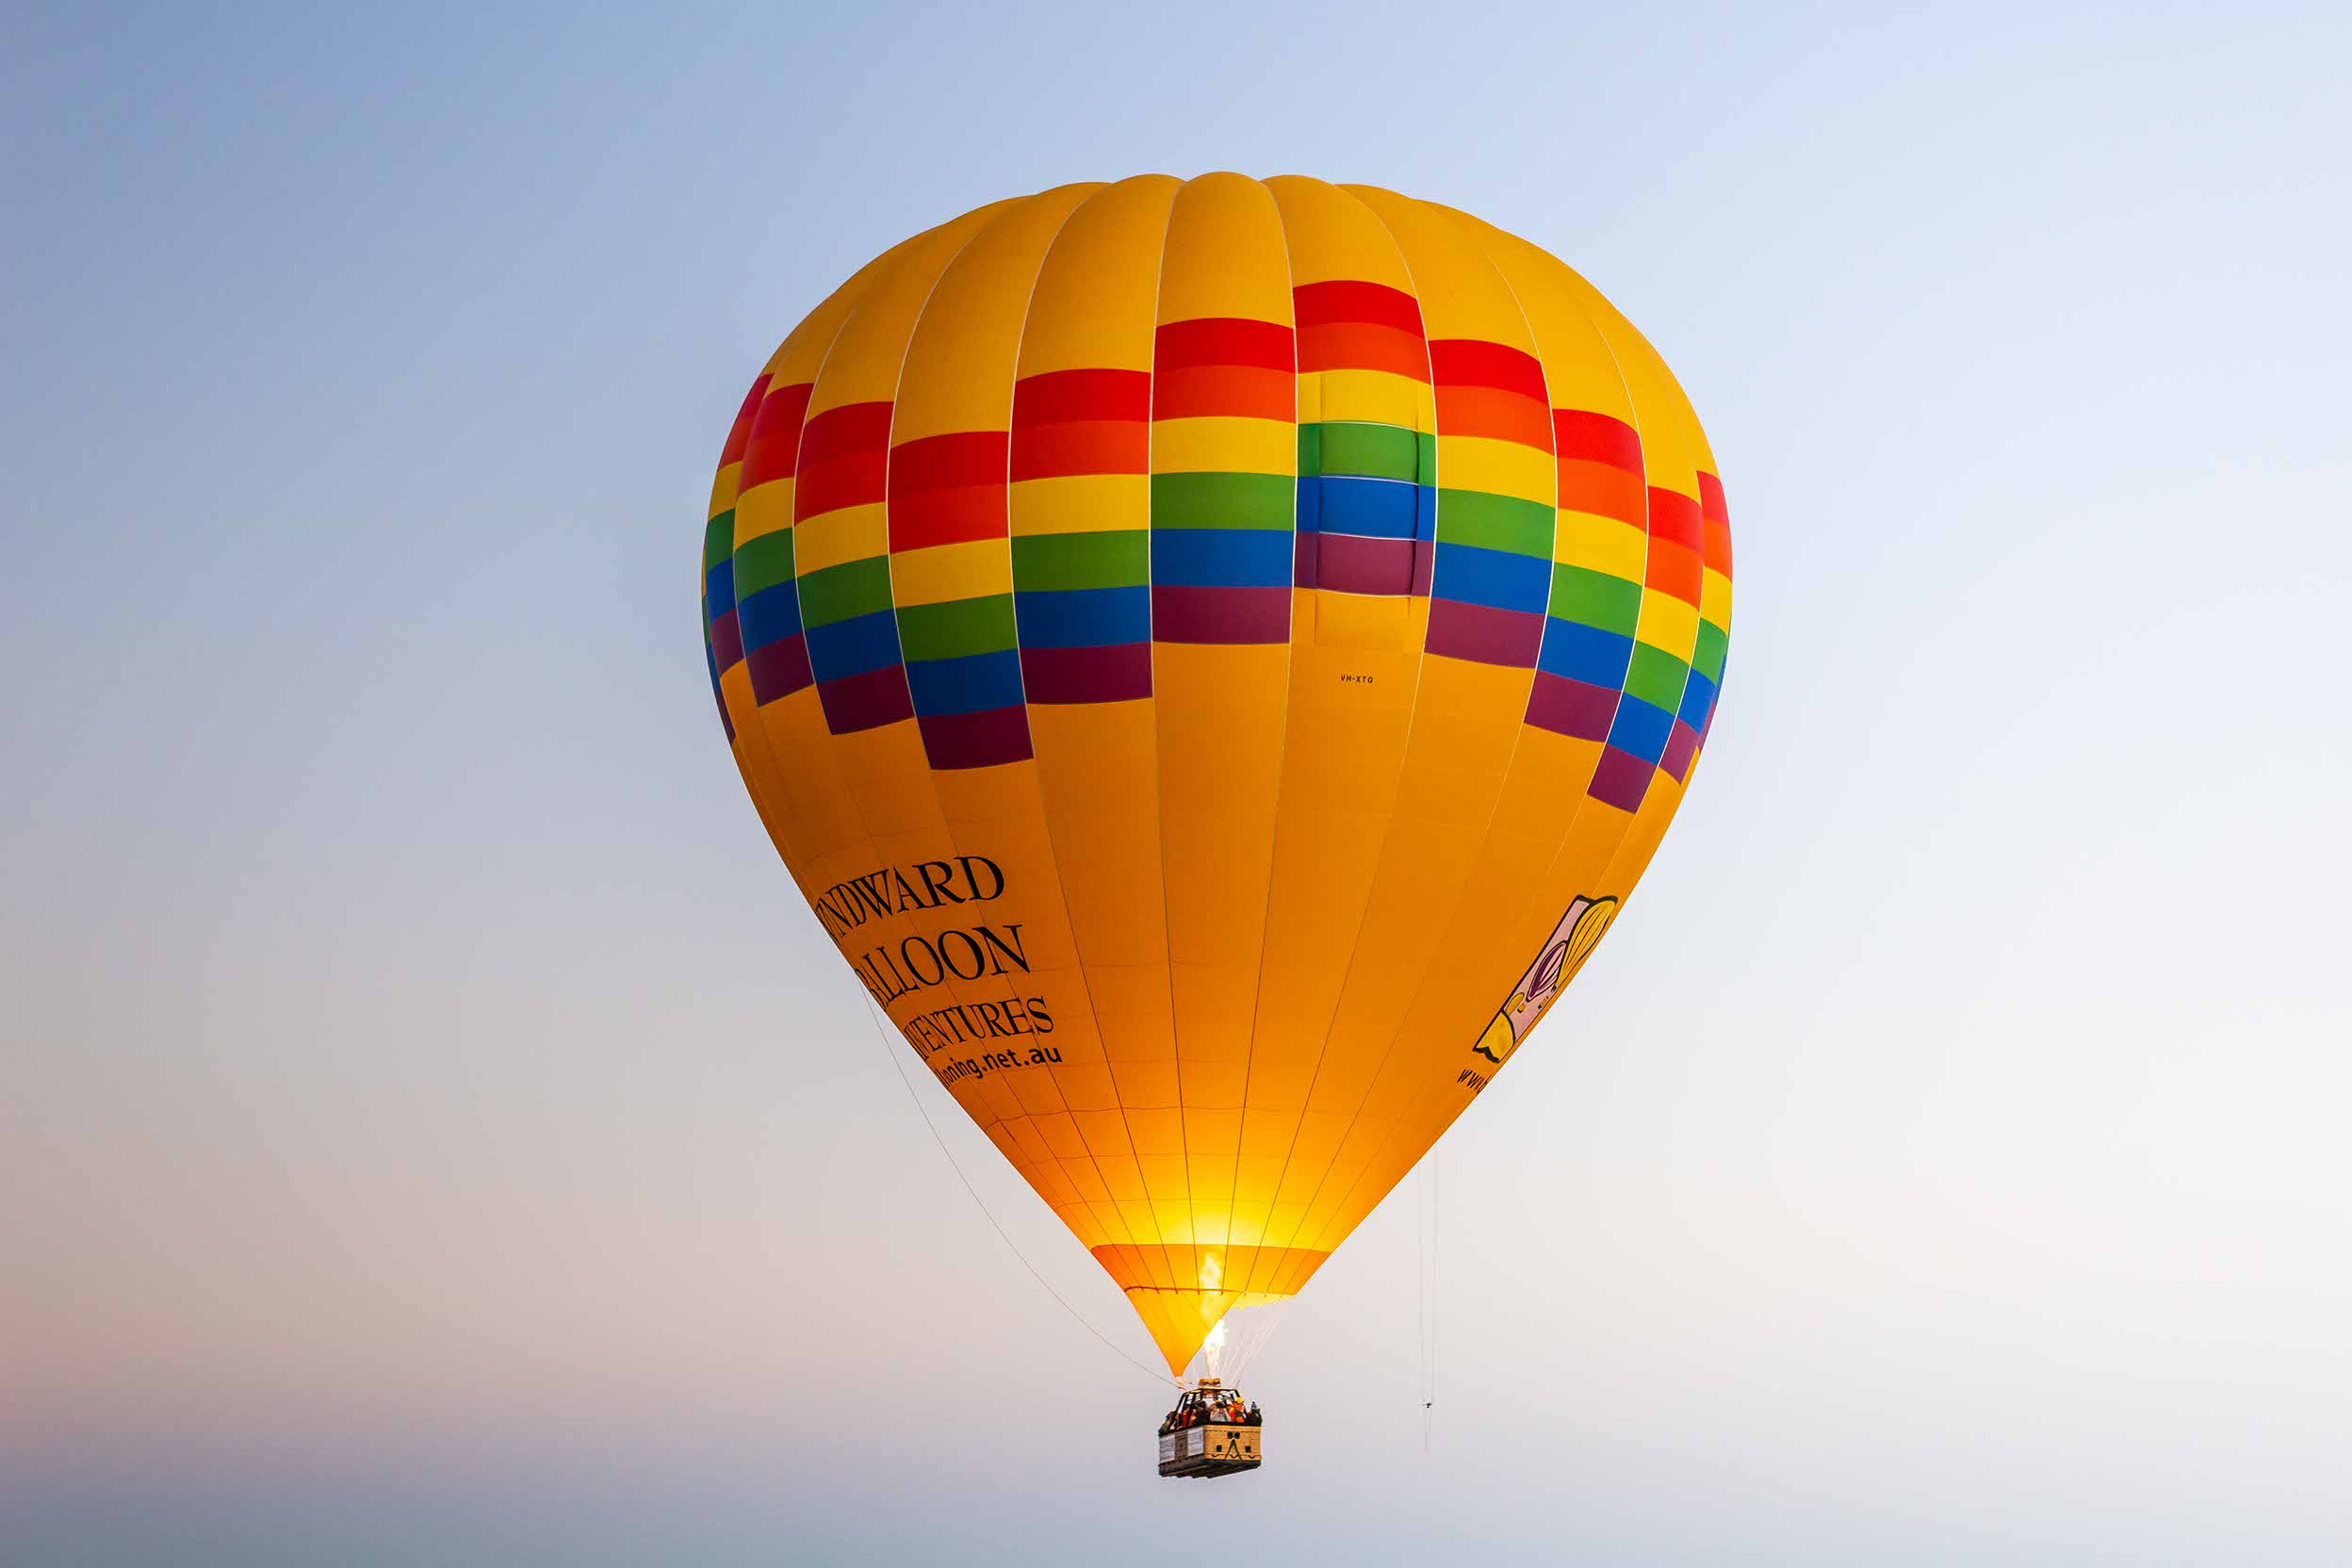 Northam Hot Air Balloon Local Matters LPG hot air balloon in air with gas flame burners lit